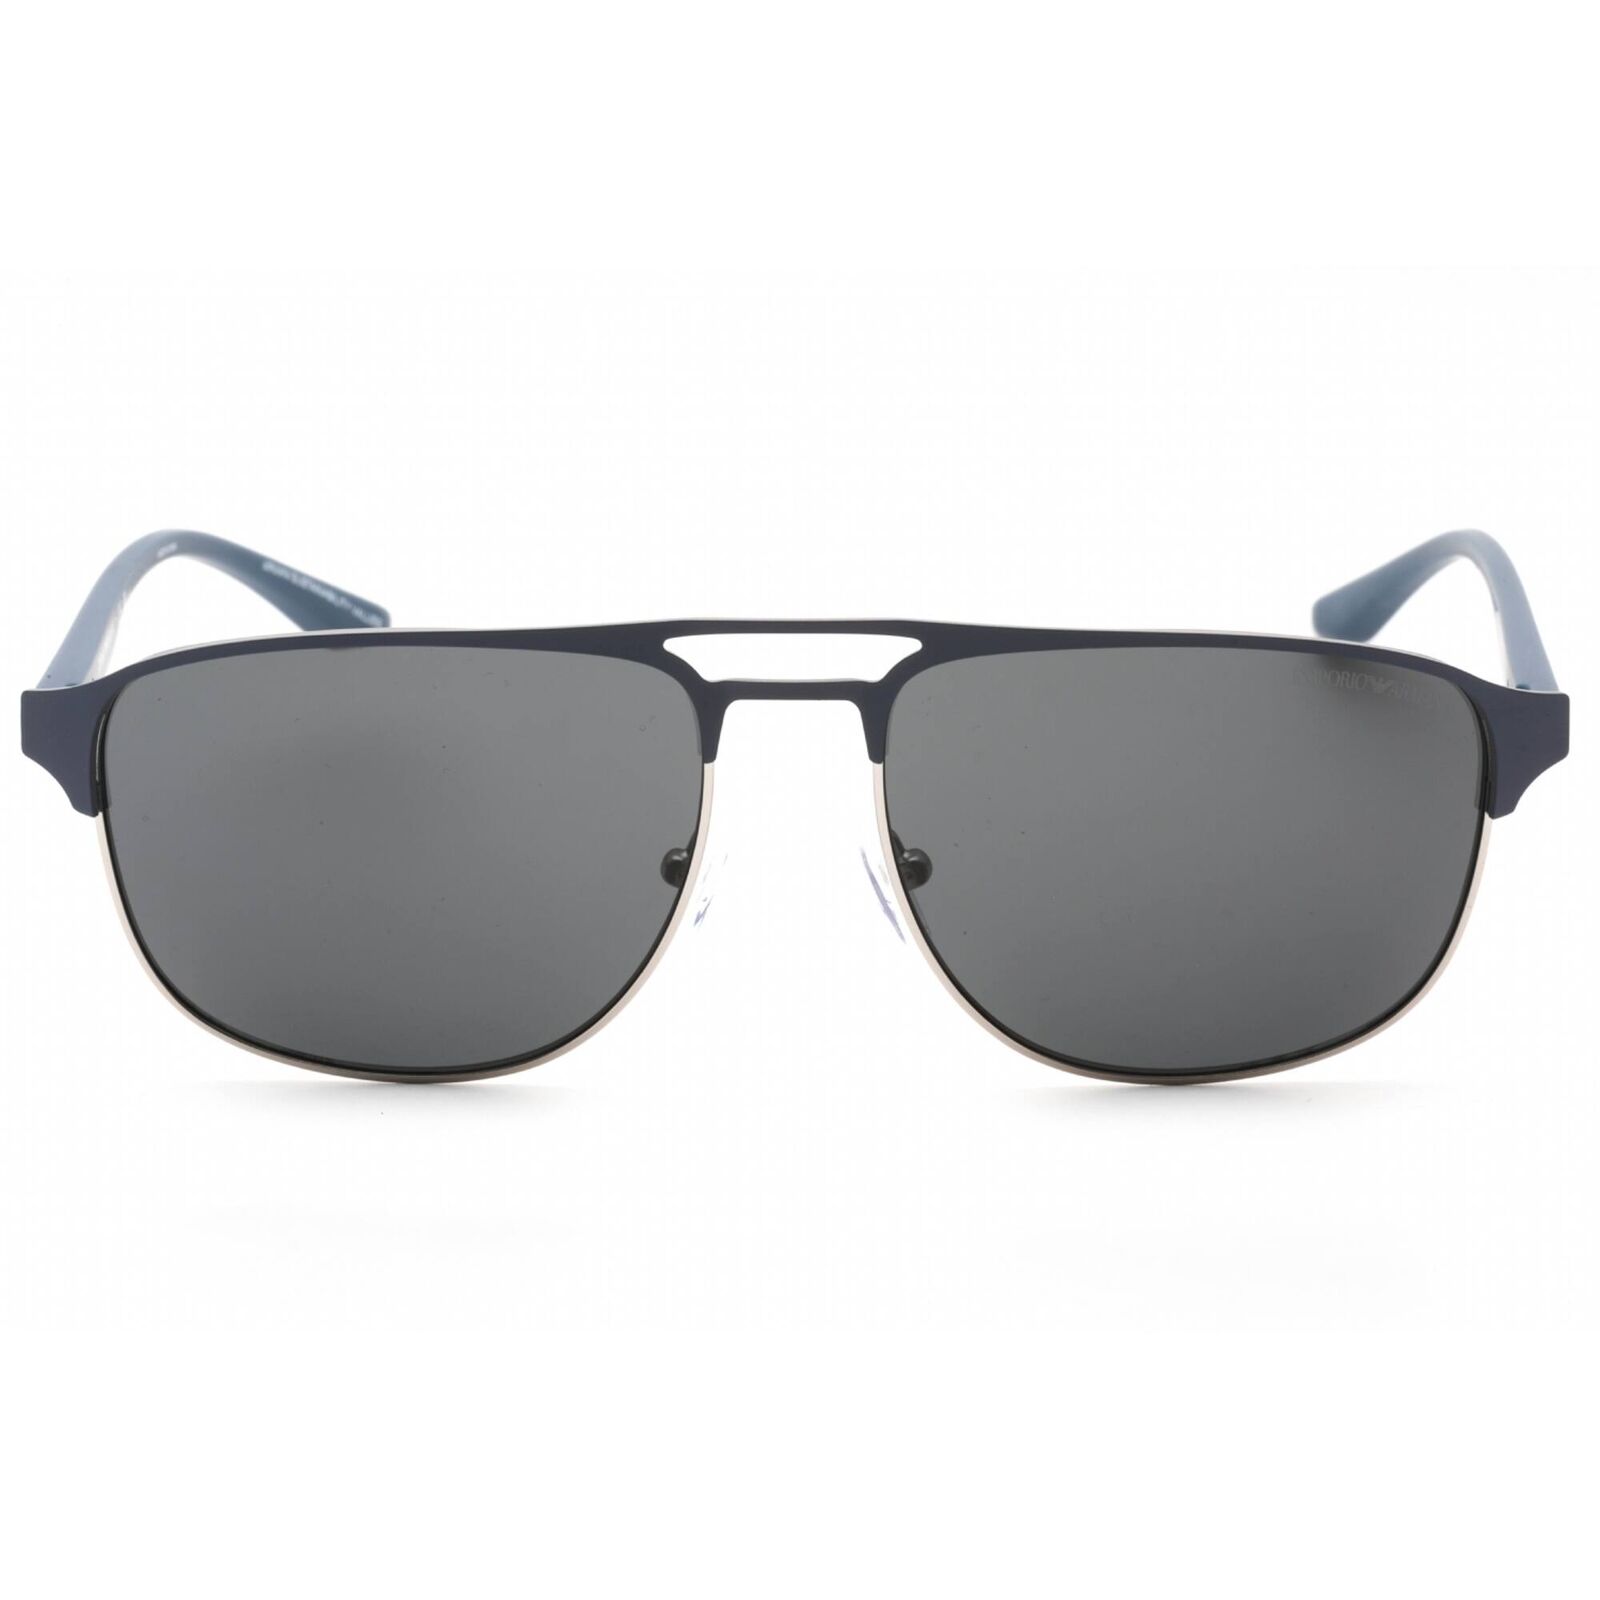 Emporio Armani Men's Sunglasses Blue On Matte Silver Metal Frame 0EA2144 336887 Emporio Armani 0EA2144 336887 - фотография #2